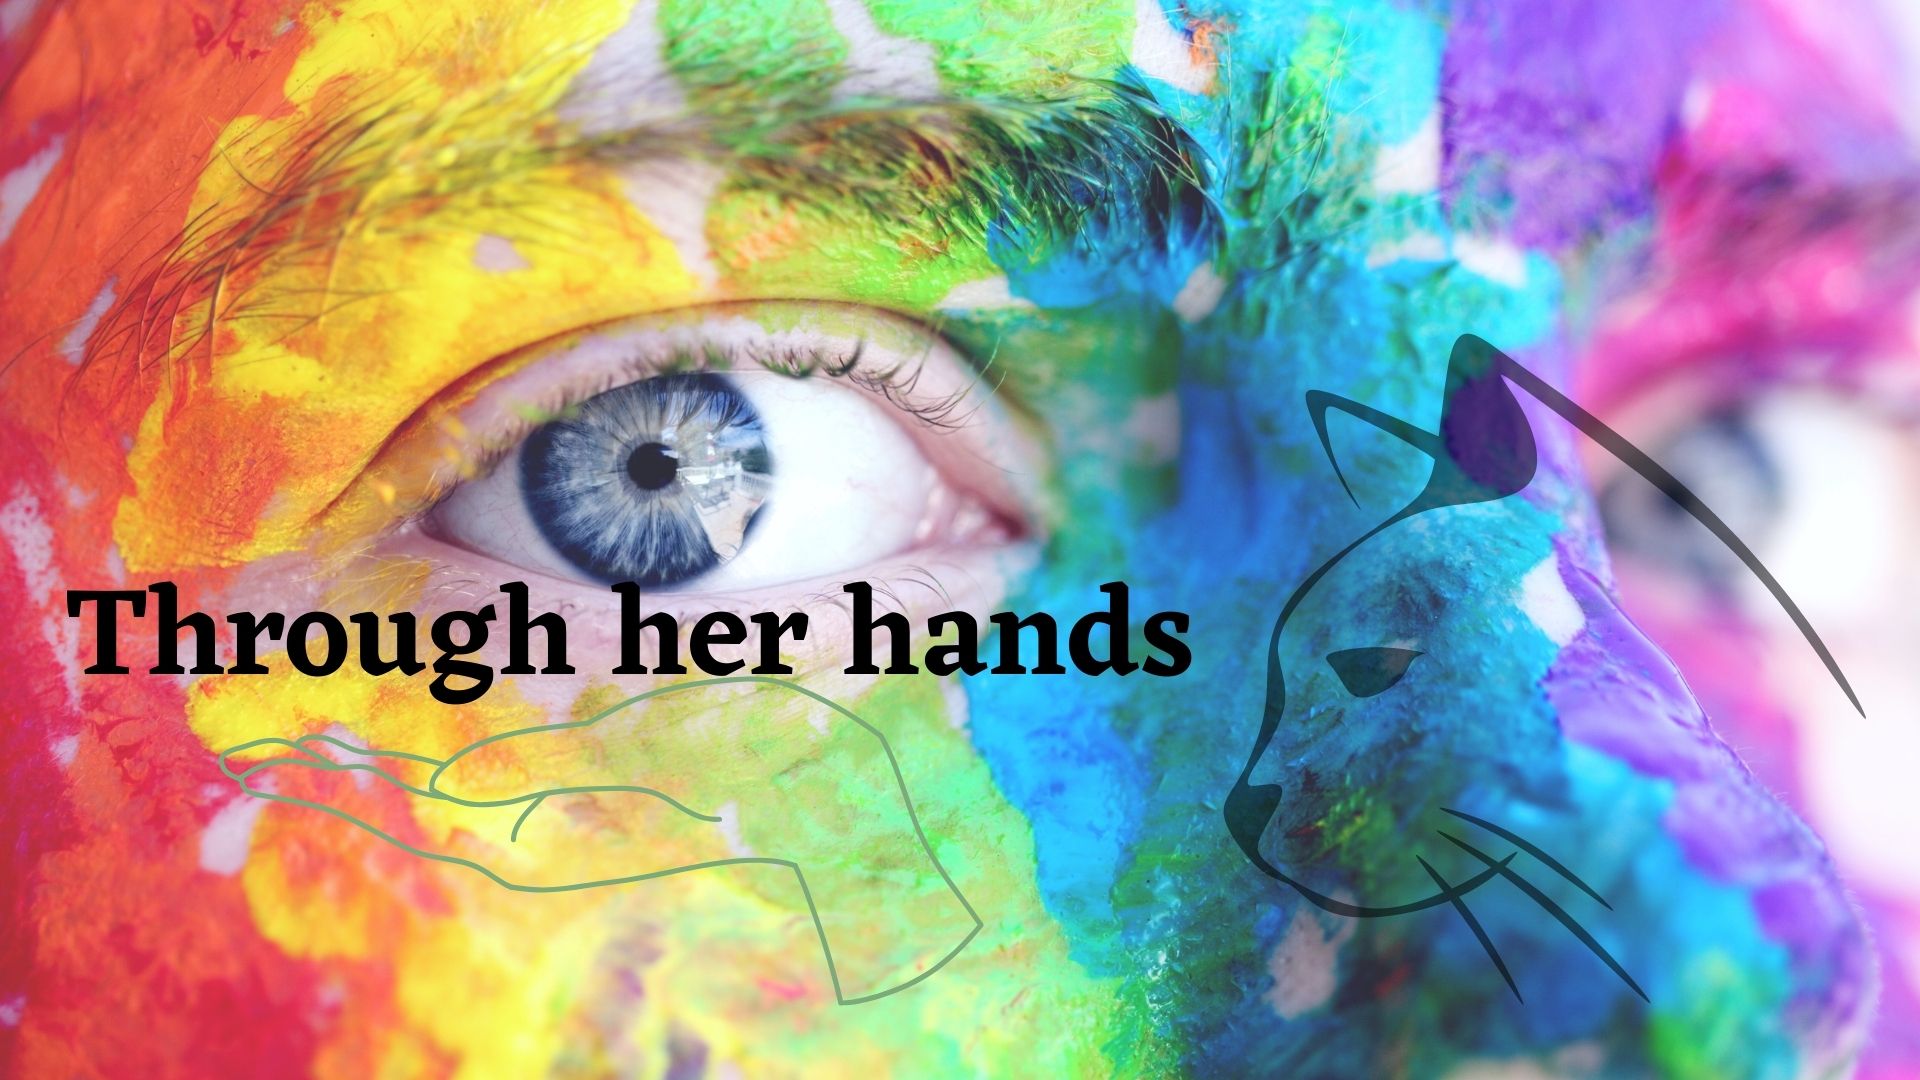 Through his hands (1).jpg